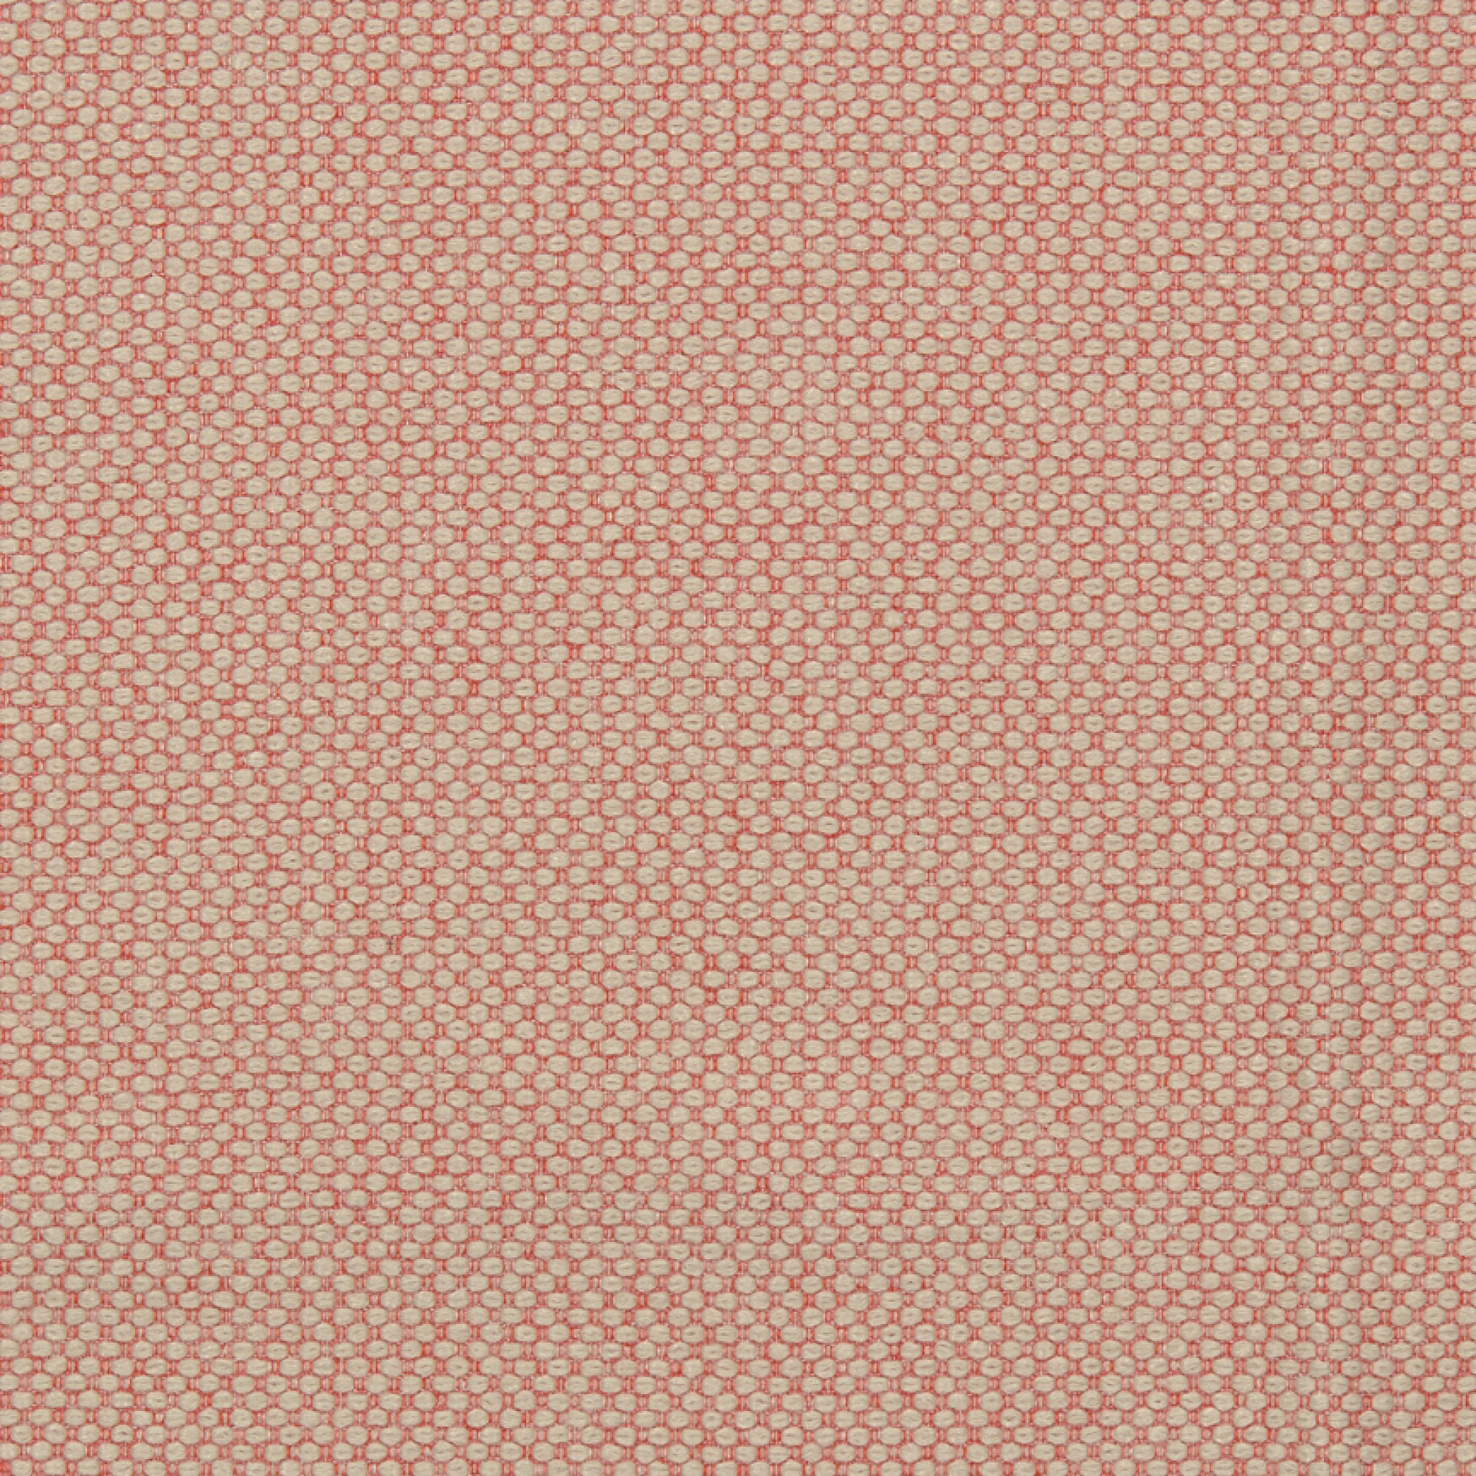 Fabric sample Merit 0034 pink